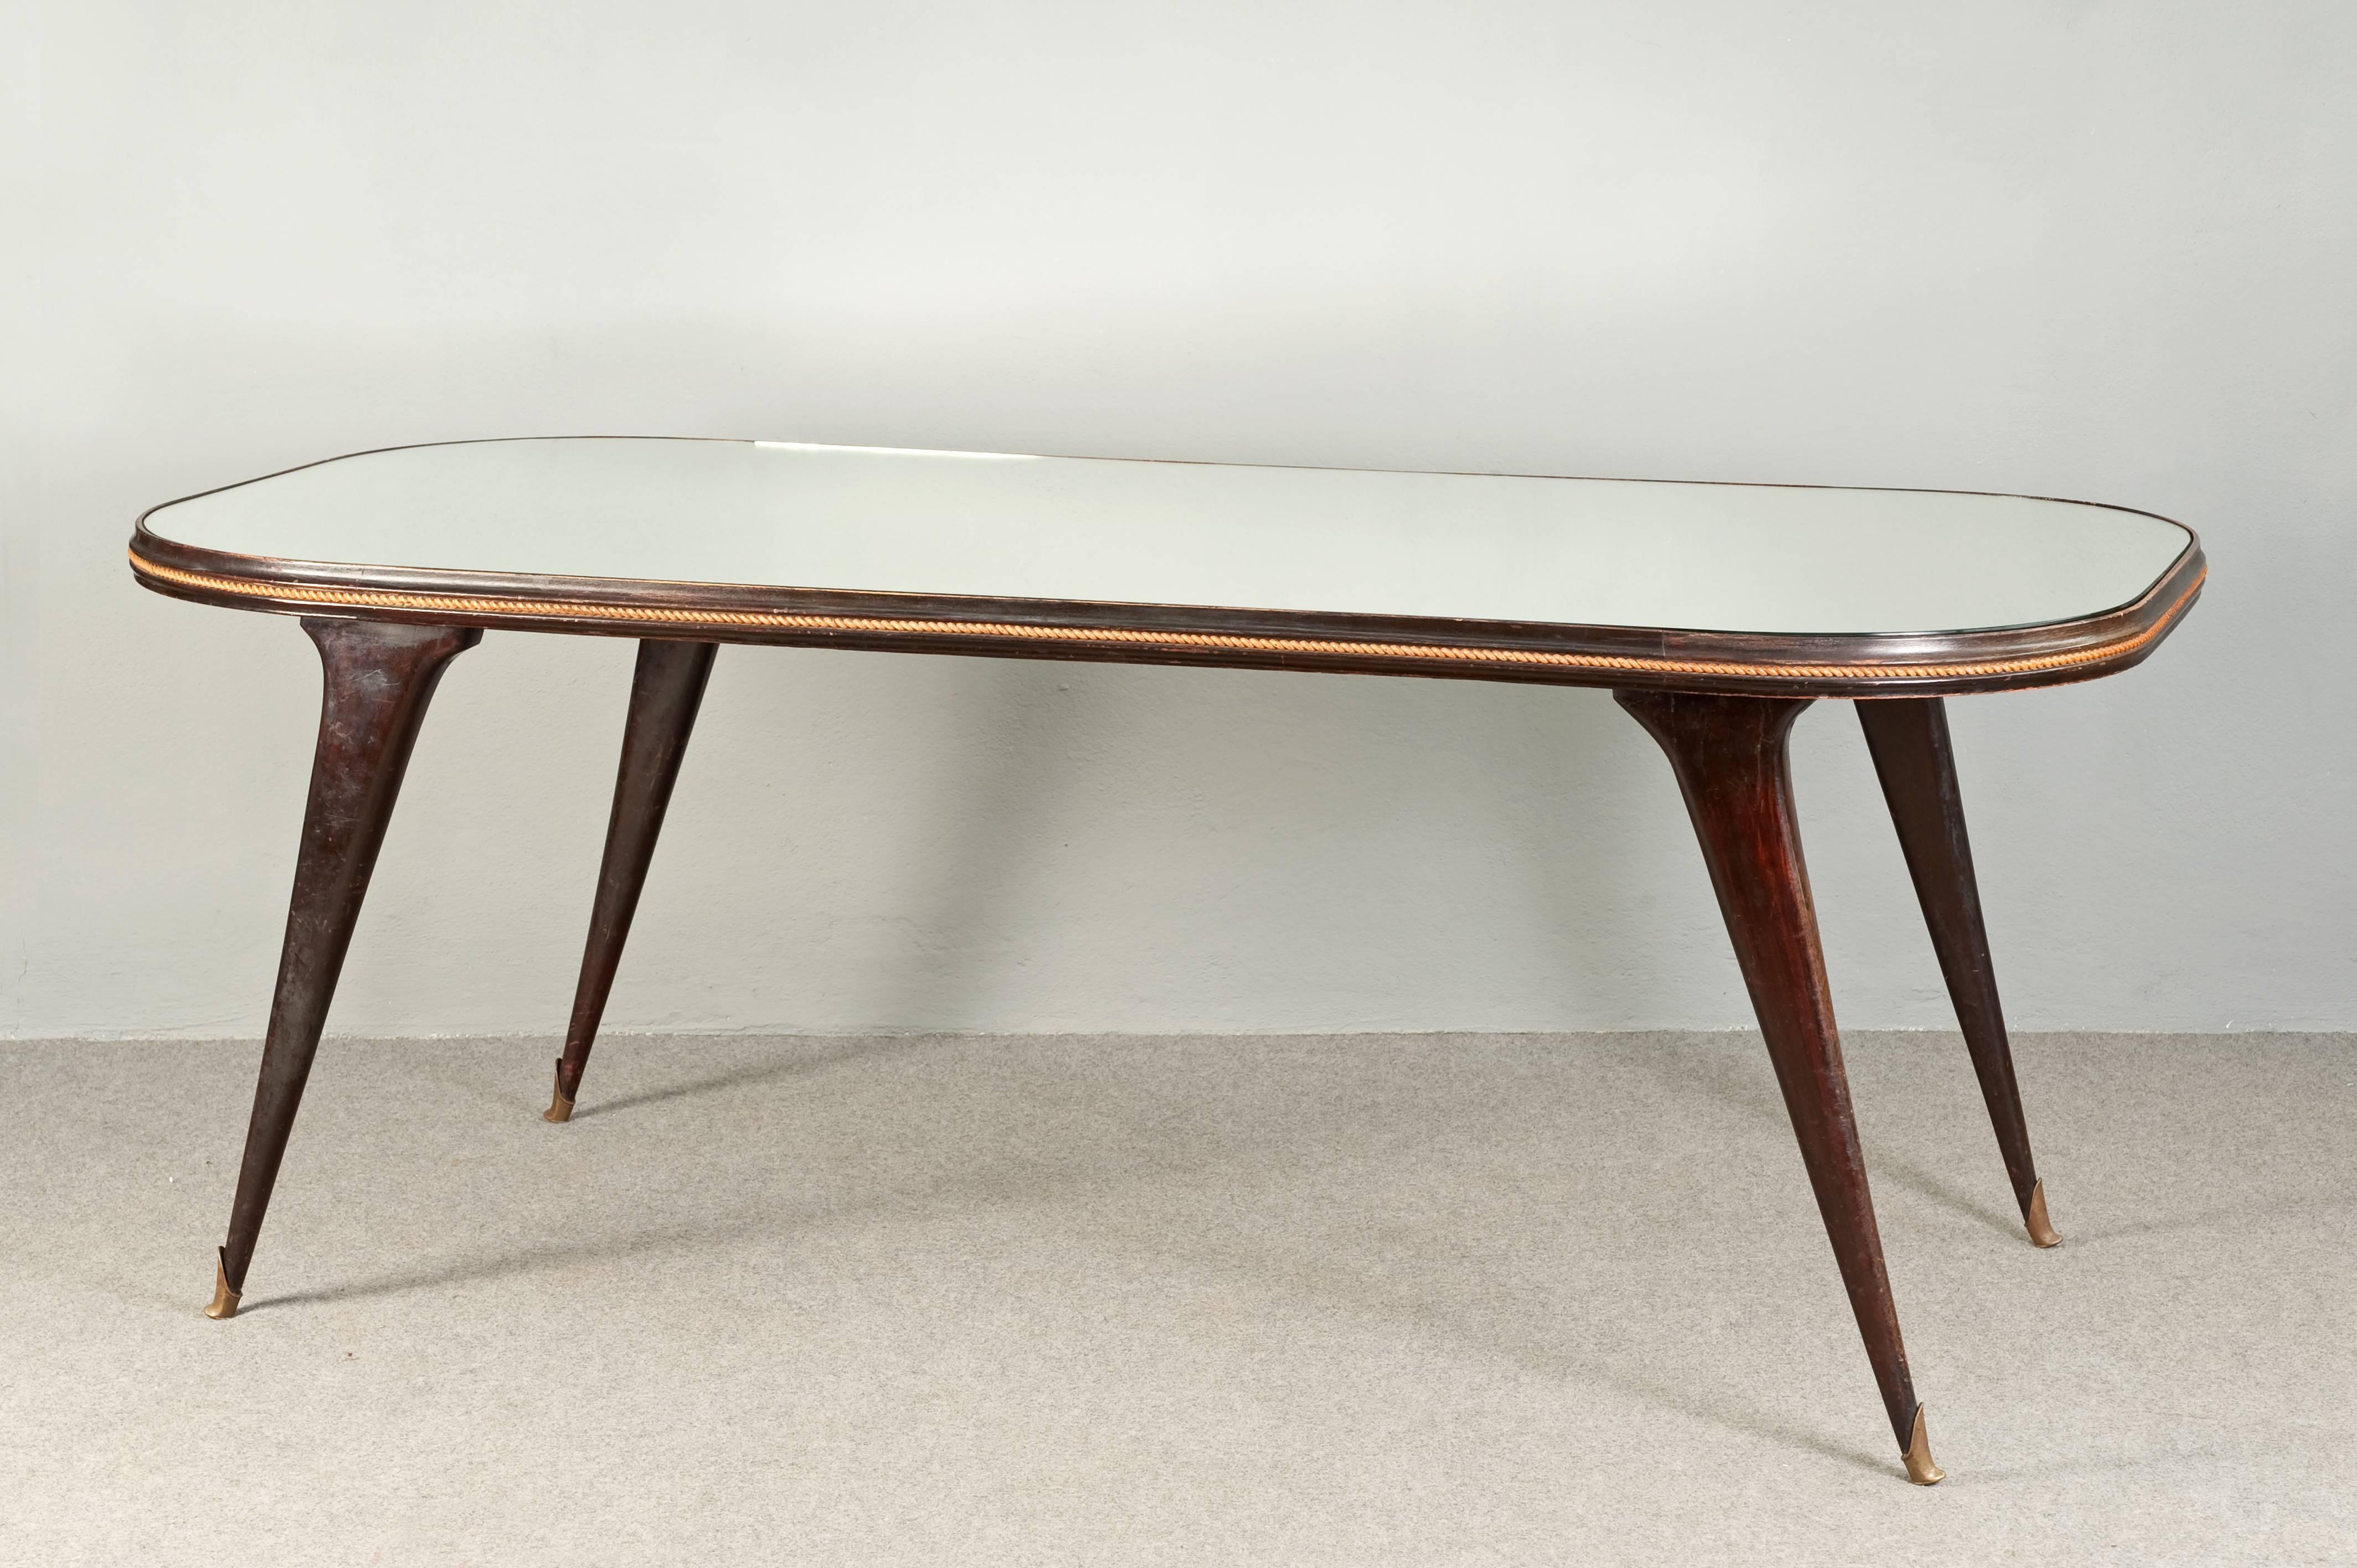 Elegant dining table attributed to Fontana Arte.
Mirror top, shaped legs with brass sabots.
Bibl. Esempi di arredamento moderno R. Aloi, Hoepli 1953
Similar one : tav.4.